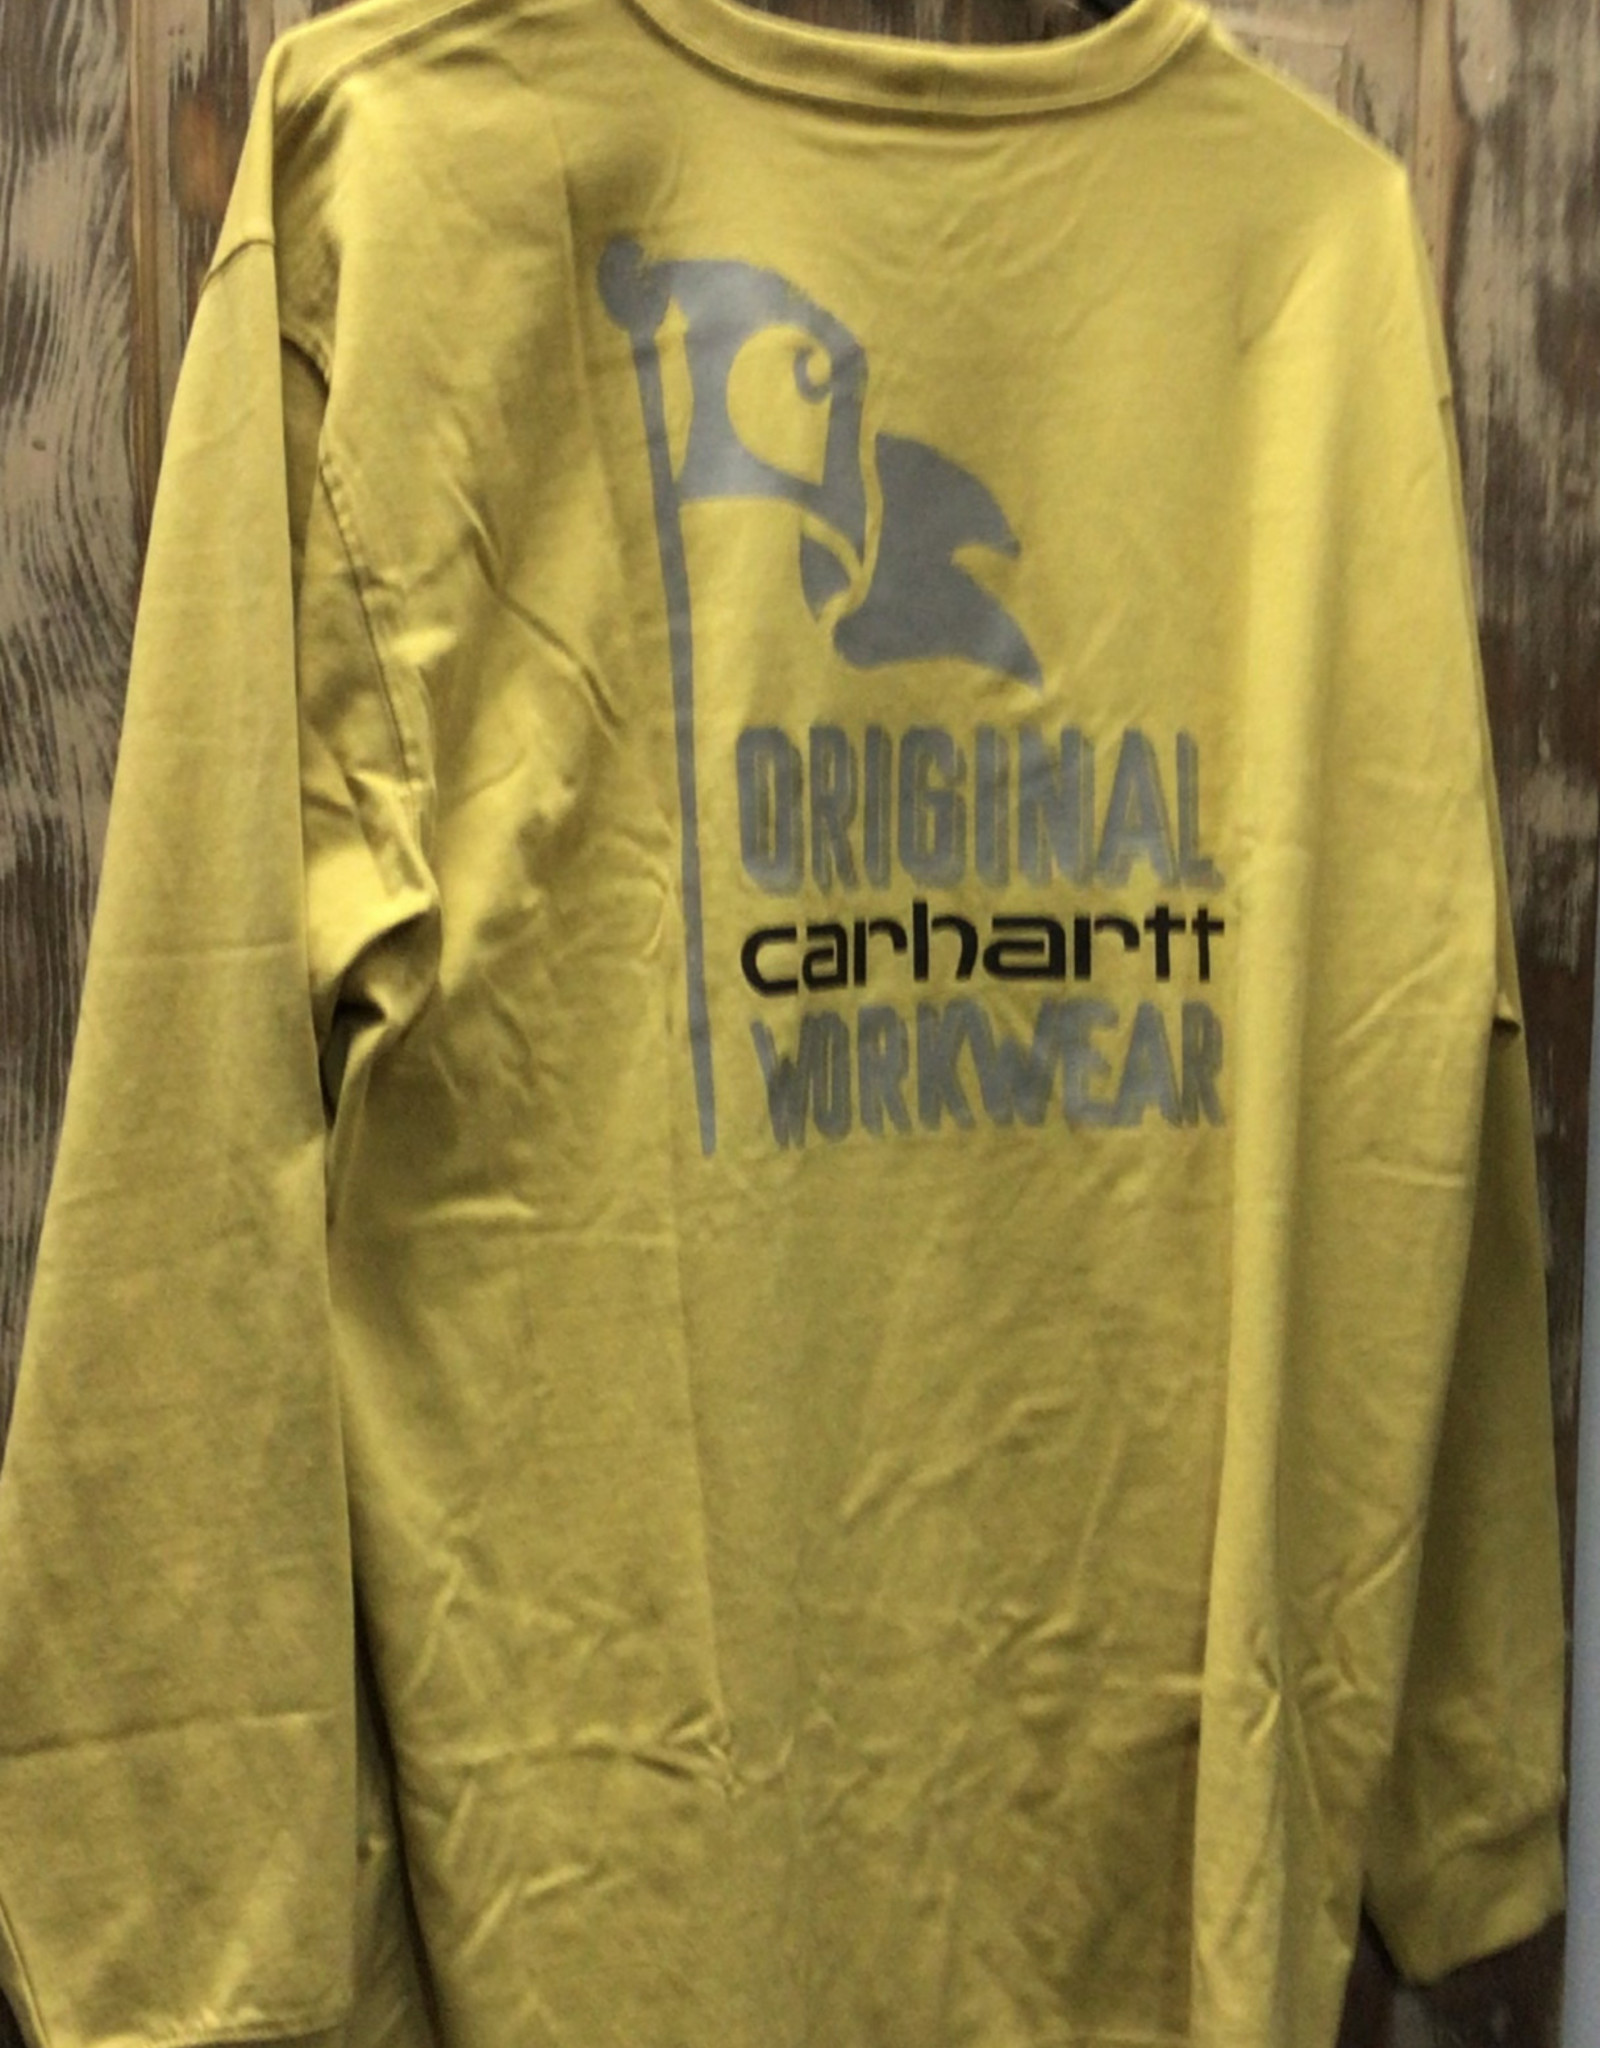 Carhartt Carhartt 104889 Loose Fit Heavy Weight L/S Flag Graphic T-Shirt Men’s